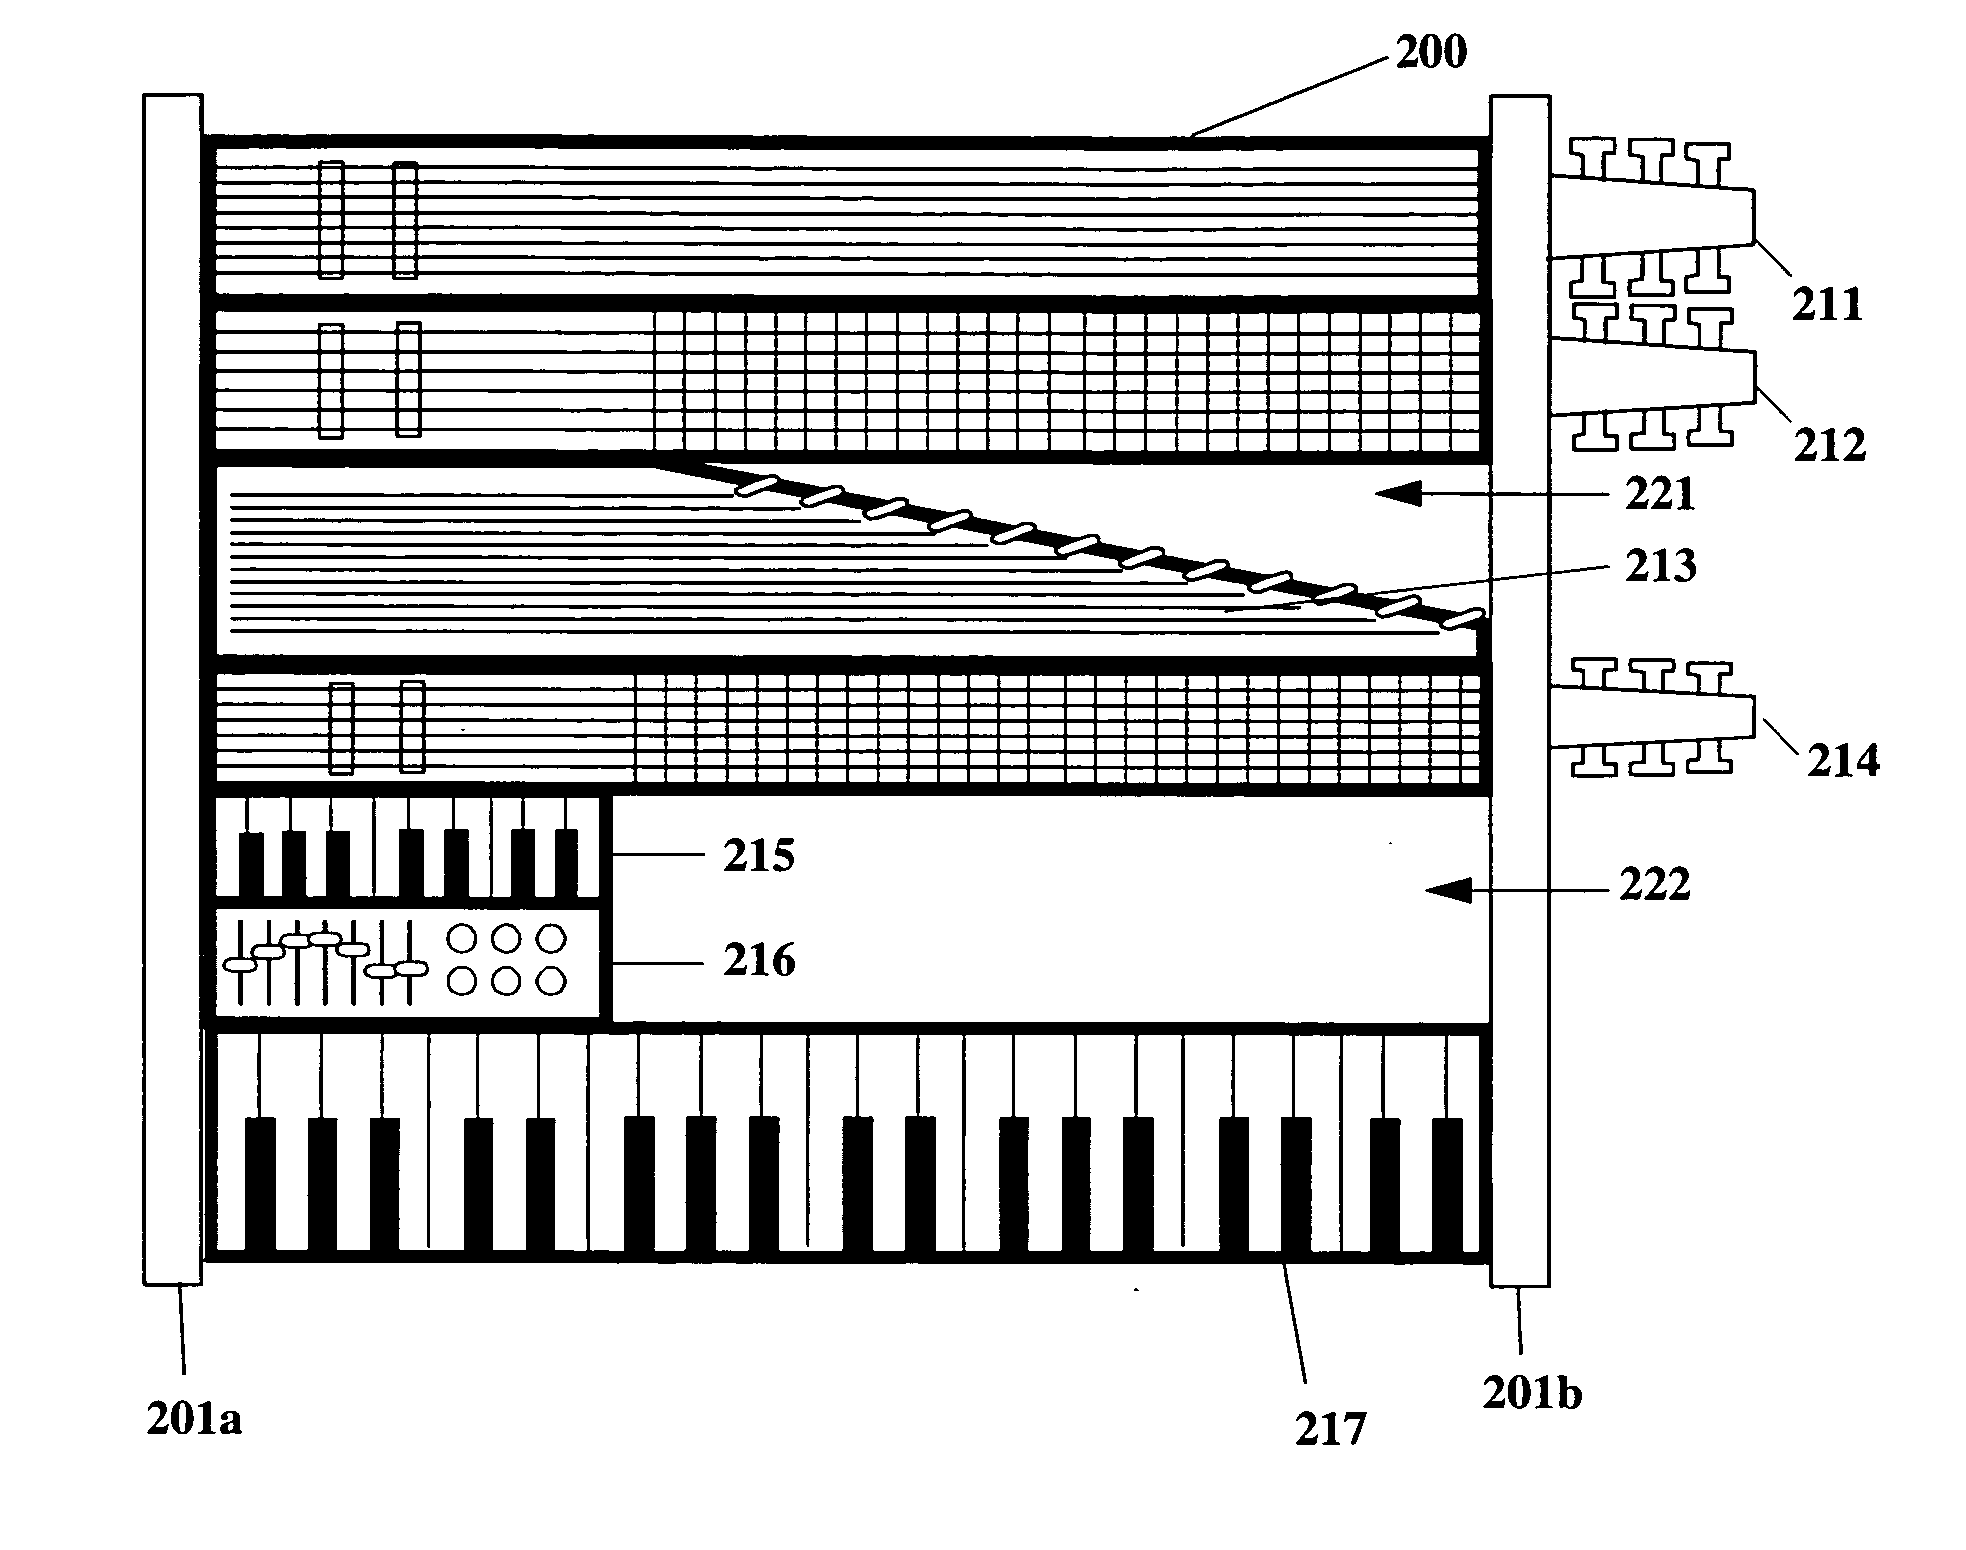 Modular structures for interchangeable musical instrument neck arrangements